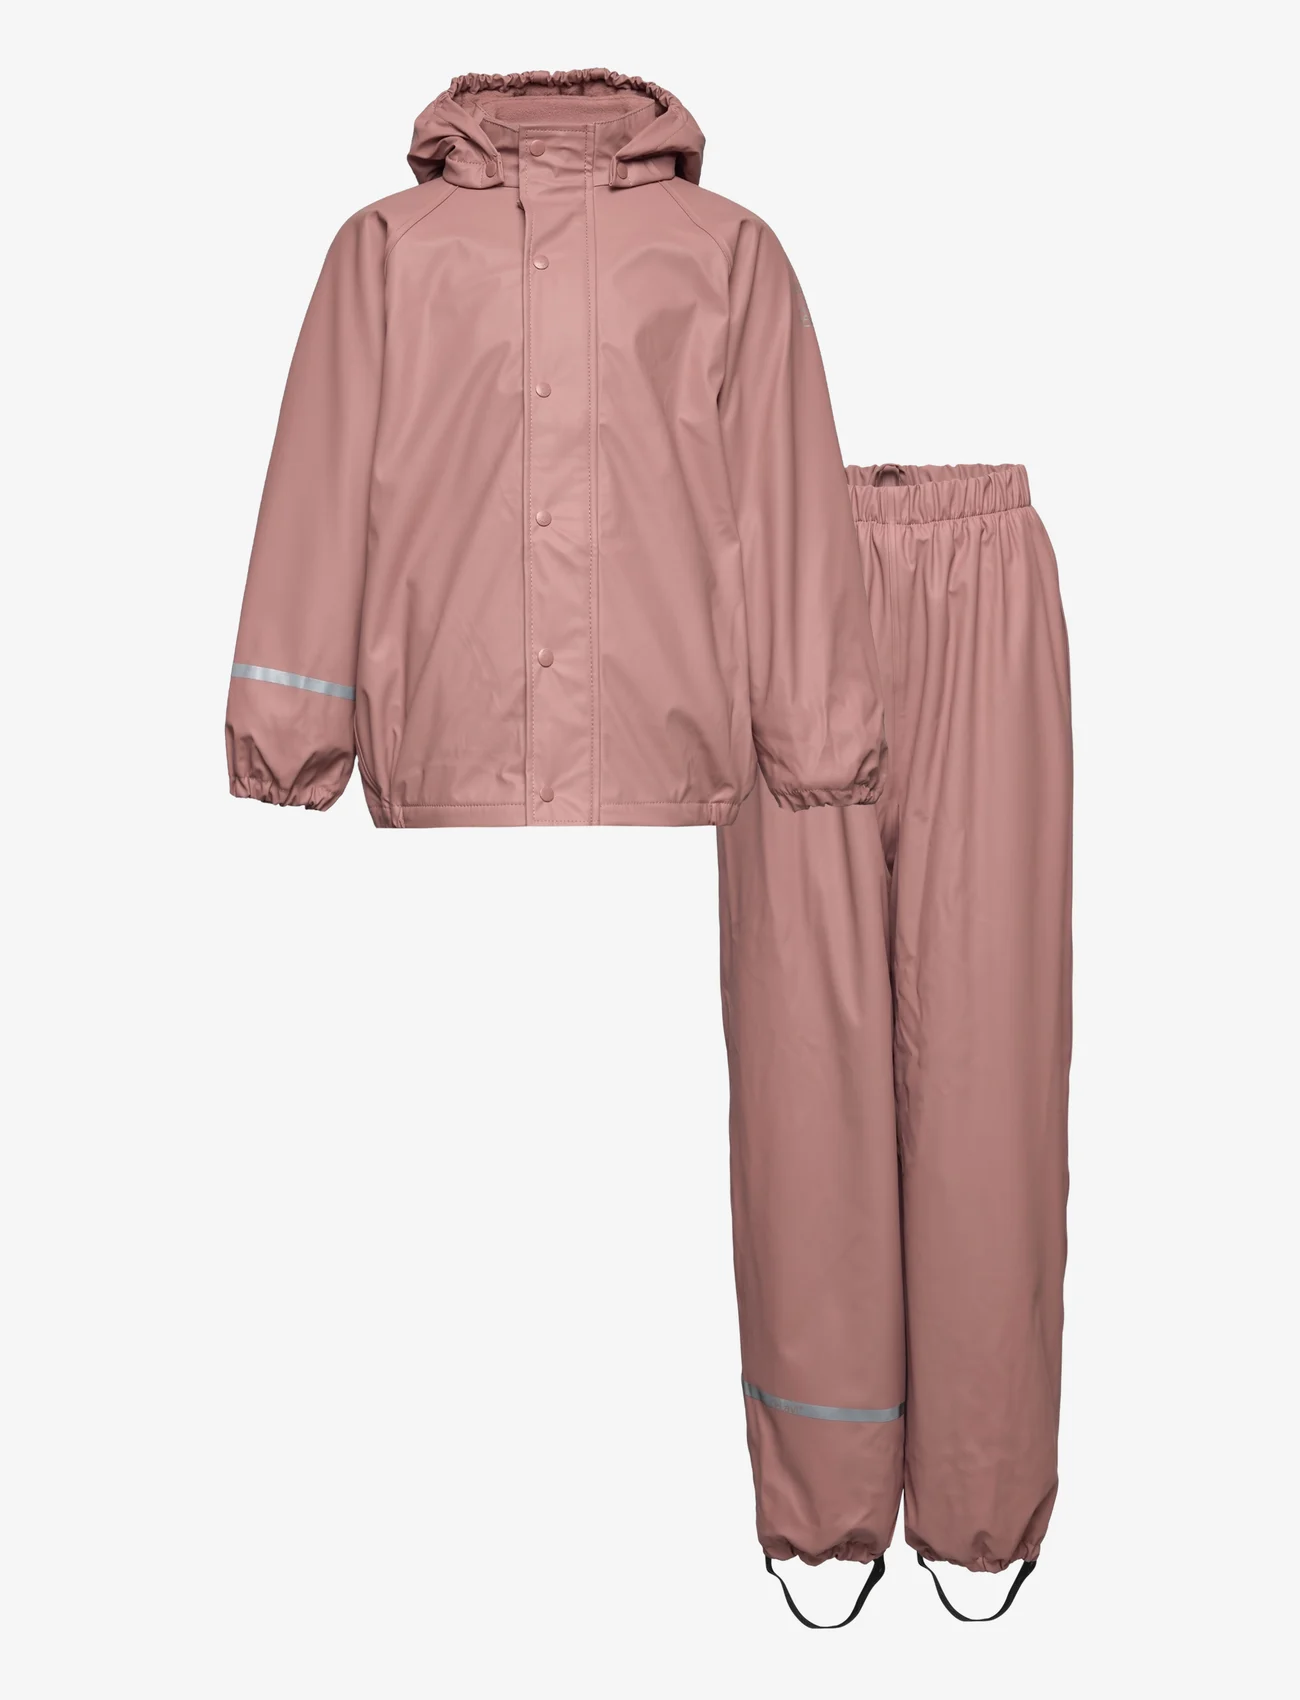 CeLaVi - Rainwear Set -Solid, w.fleece - Žieminiai kombinezonai - burlwood - 0